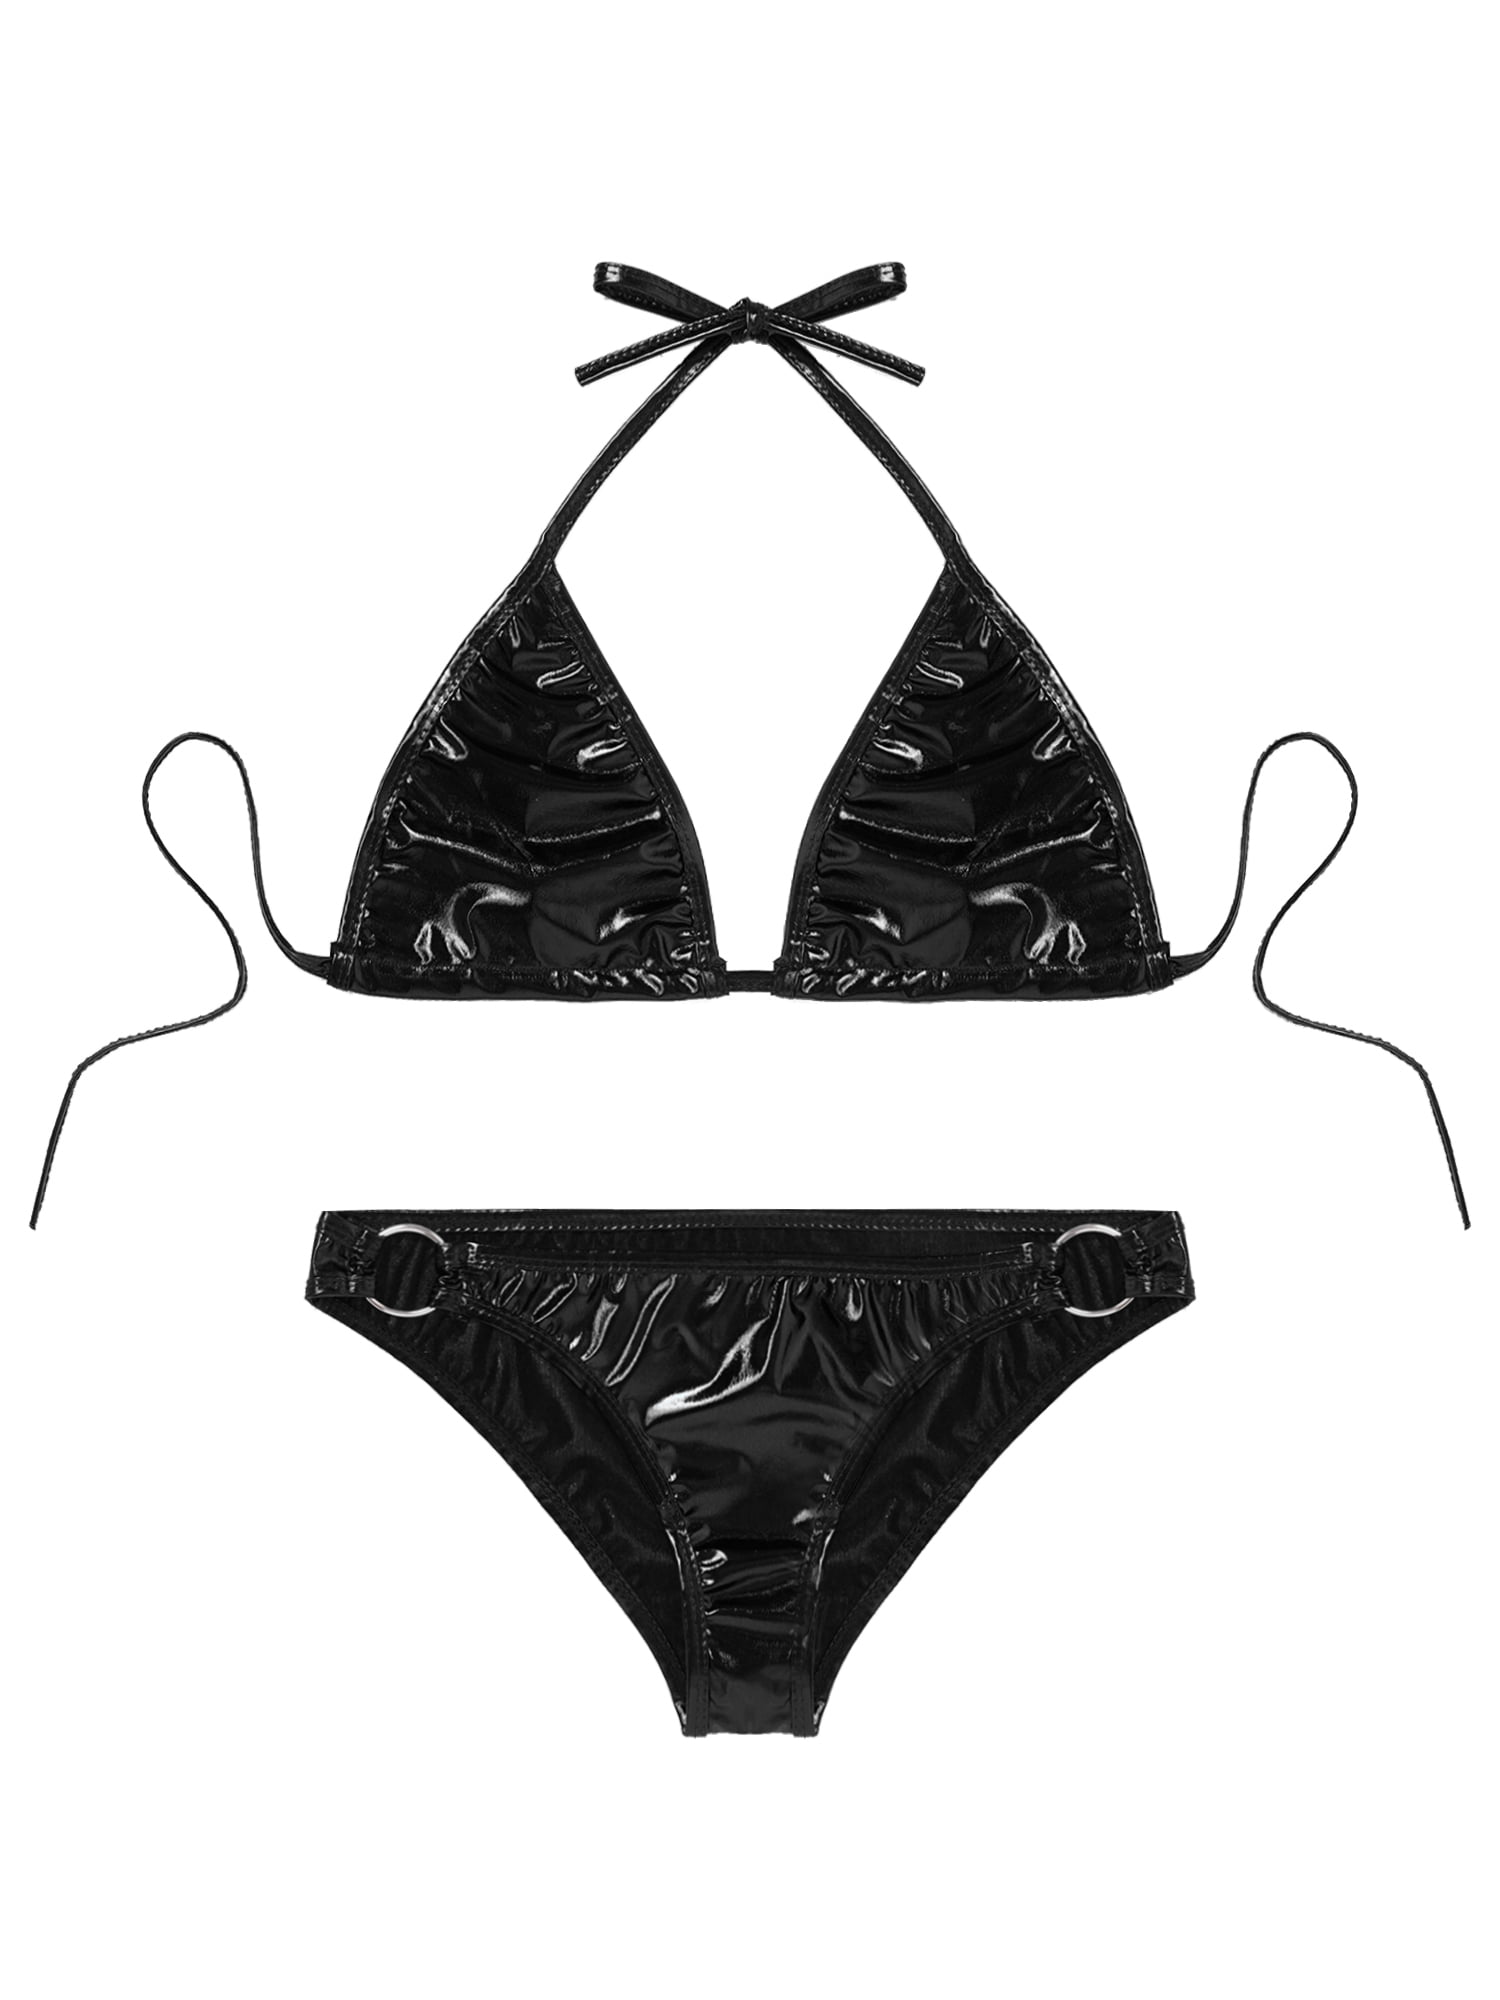 O-ring Bathing YEAHDOR Shiny with Bikini Metallic Bra Suit Womens Set Briefs Beachwear Bikini